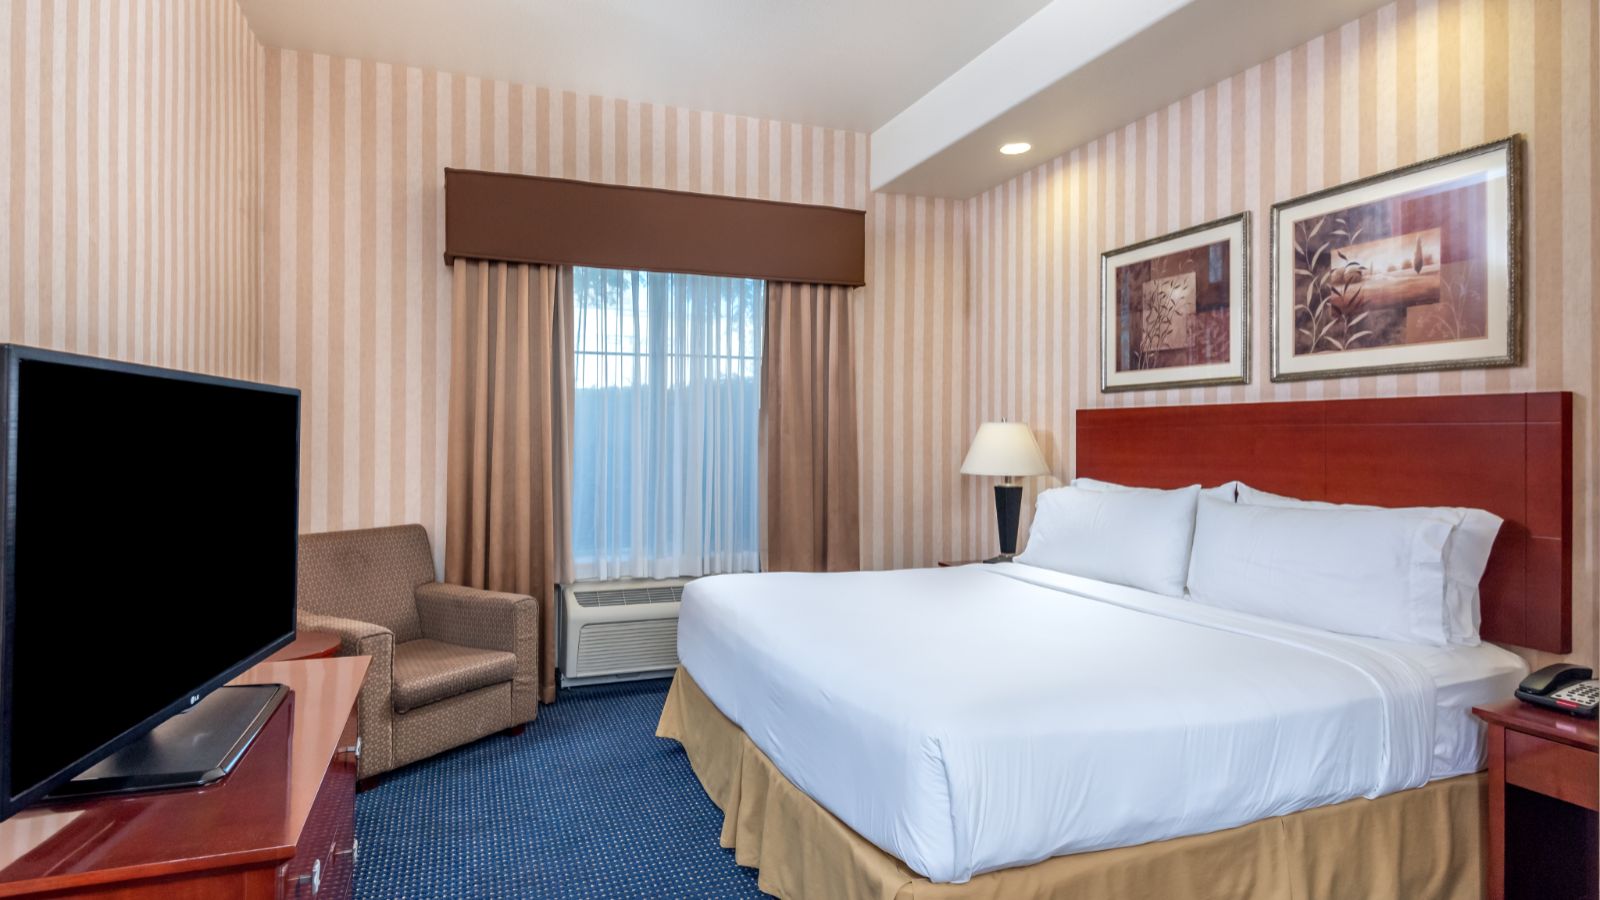 Lathrop CA hotel room amenities